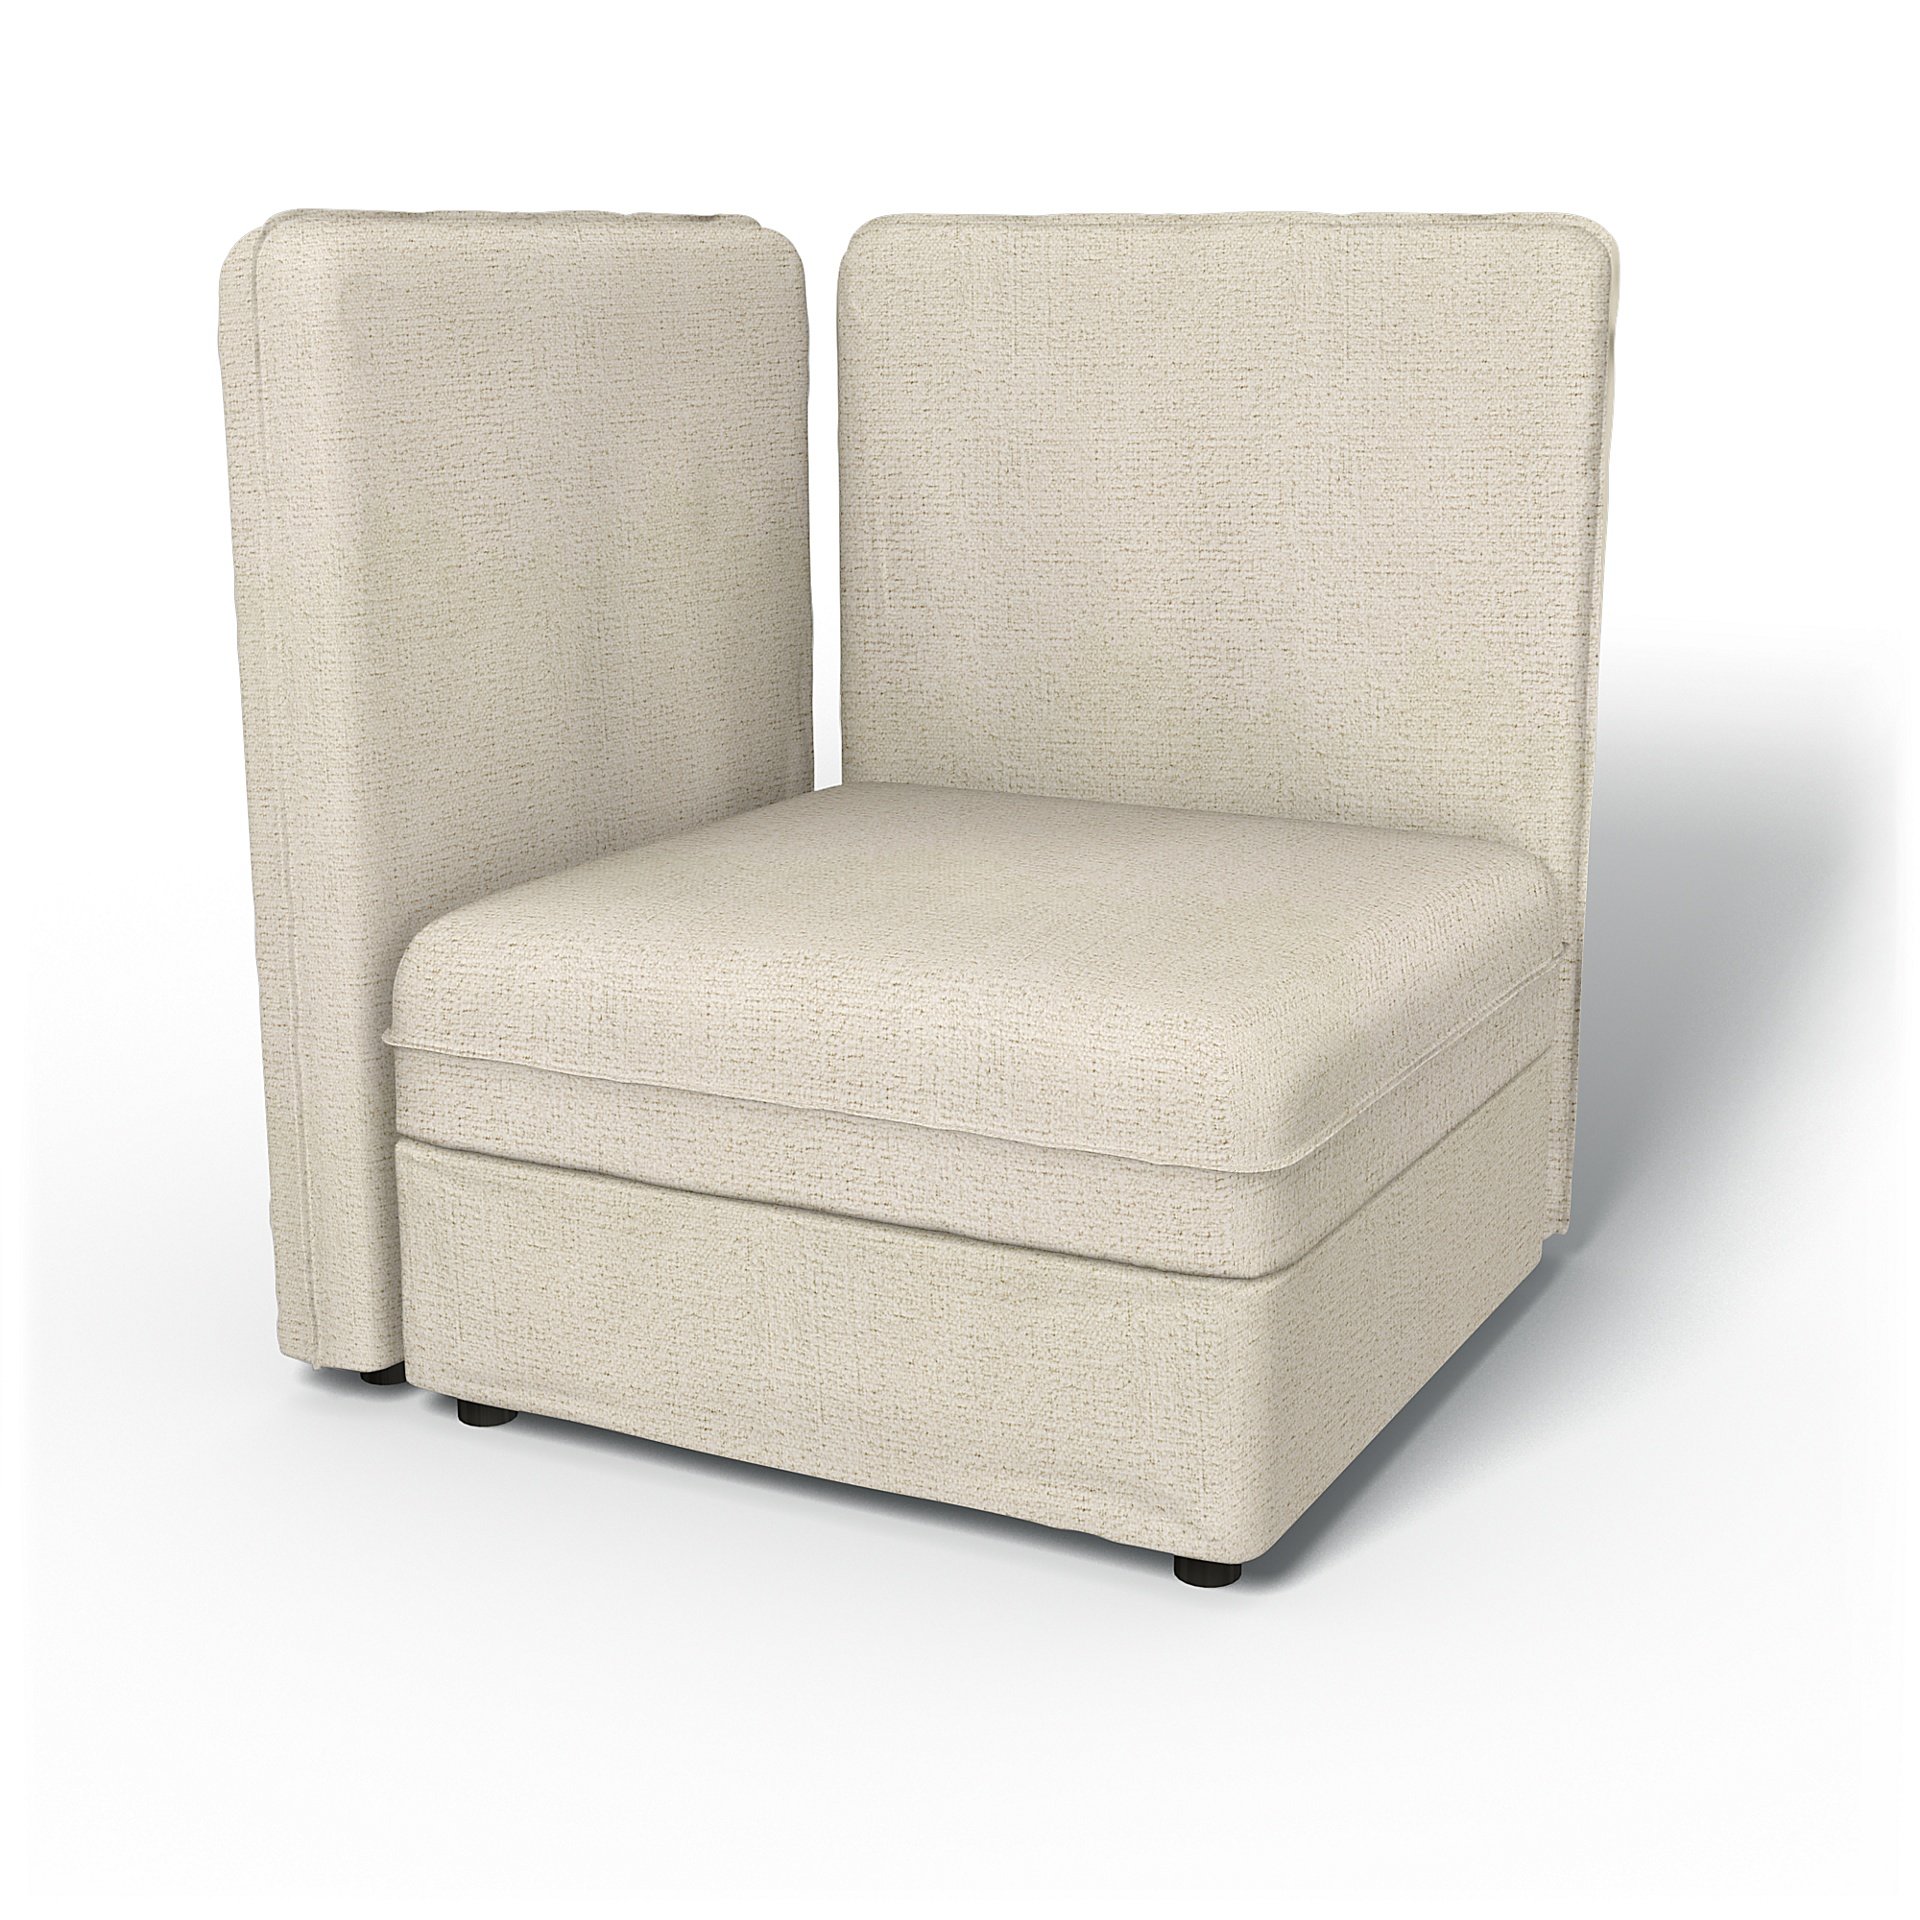 IKEA - Vallentuna Corner Seat Module with High Back and Storage Cover 80x80 32x32in, Ecru, Boucle & 